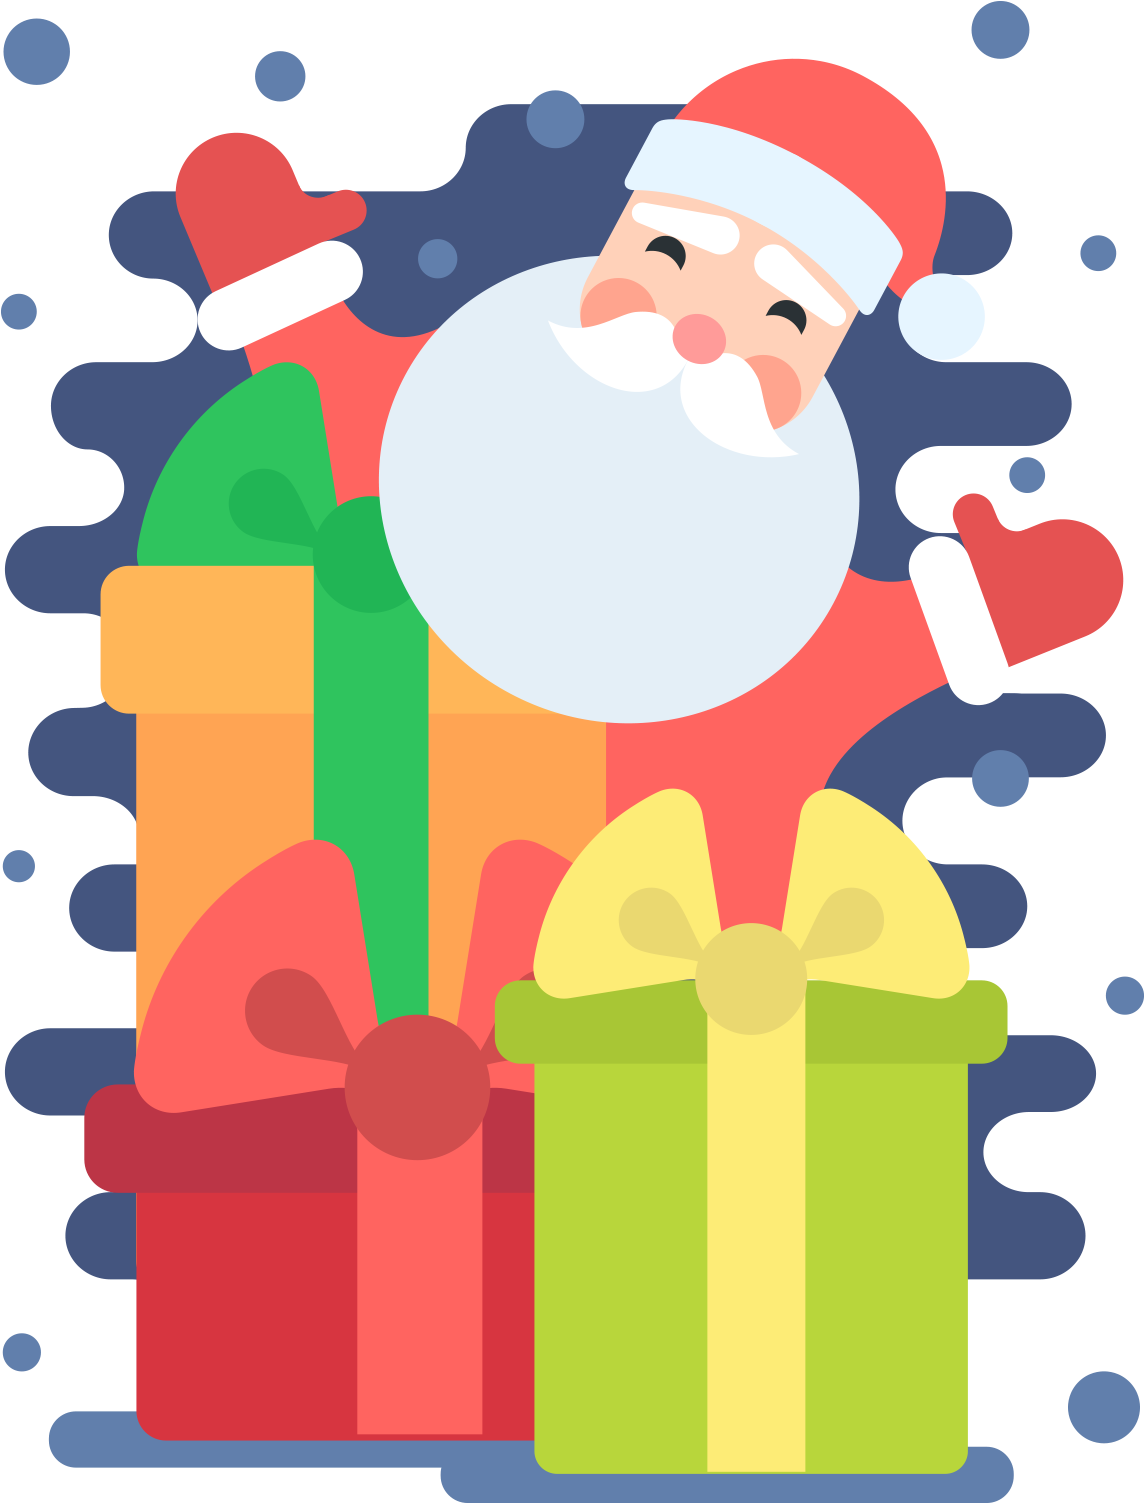 Santa Claus Reindeer Christmas Ornament Illustration - Christmas Day (2000x2000)